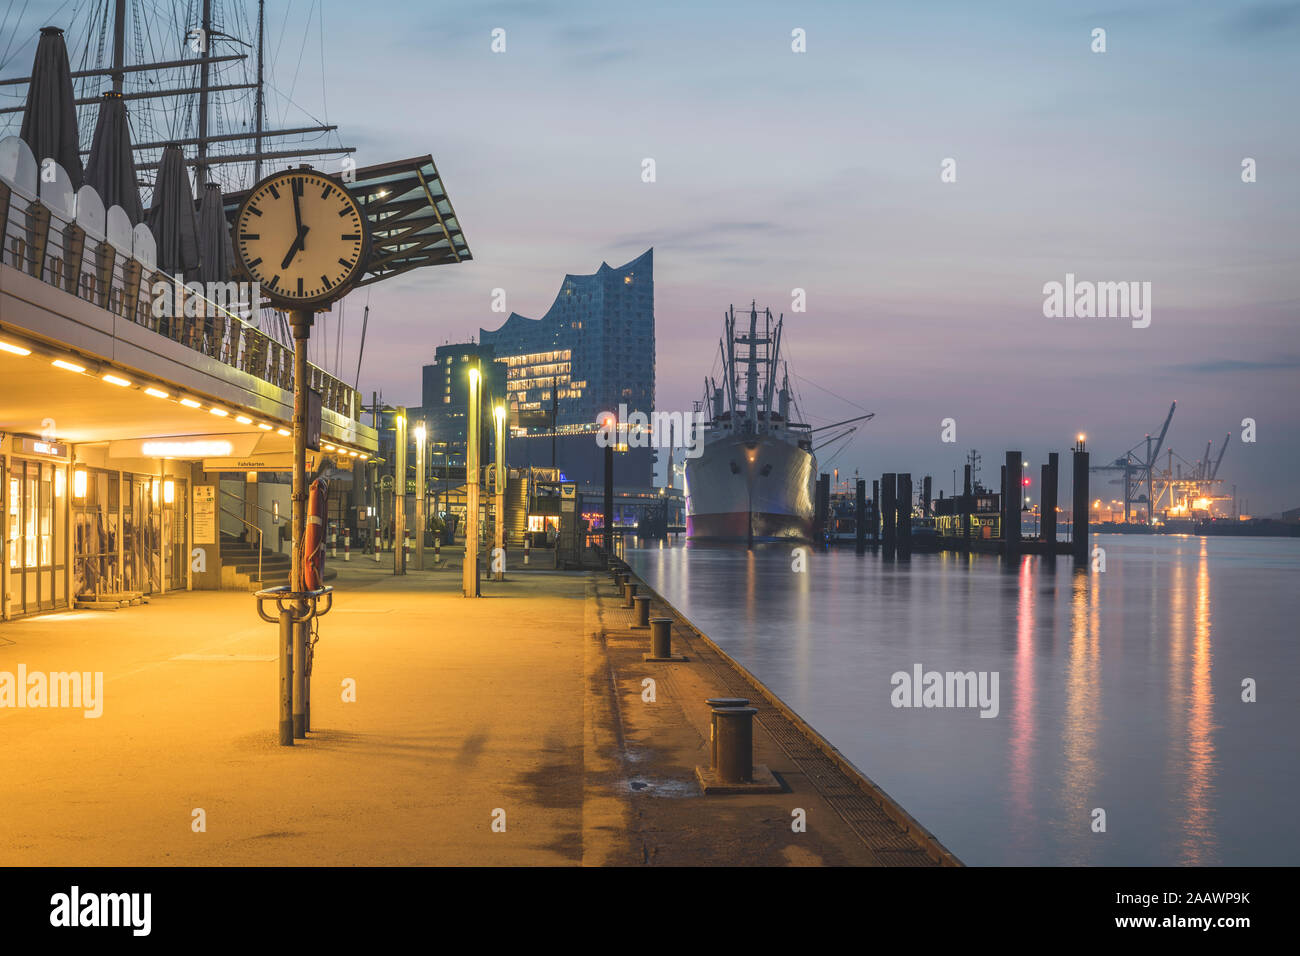 Clock on St. Pauli Piers against sky at sunrise, Hamburg, Germany Stock Photo